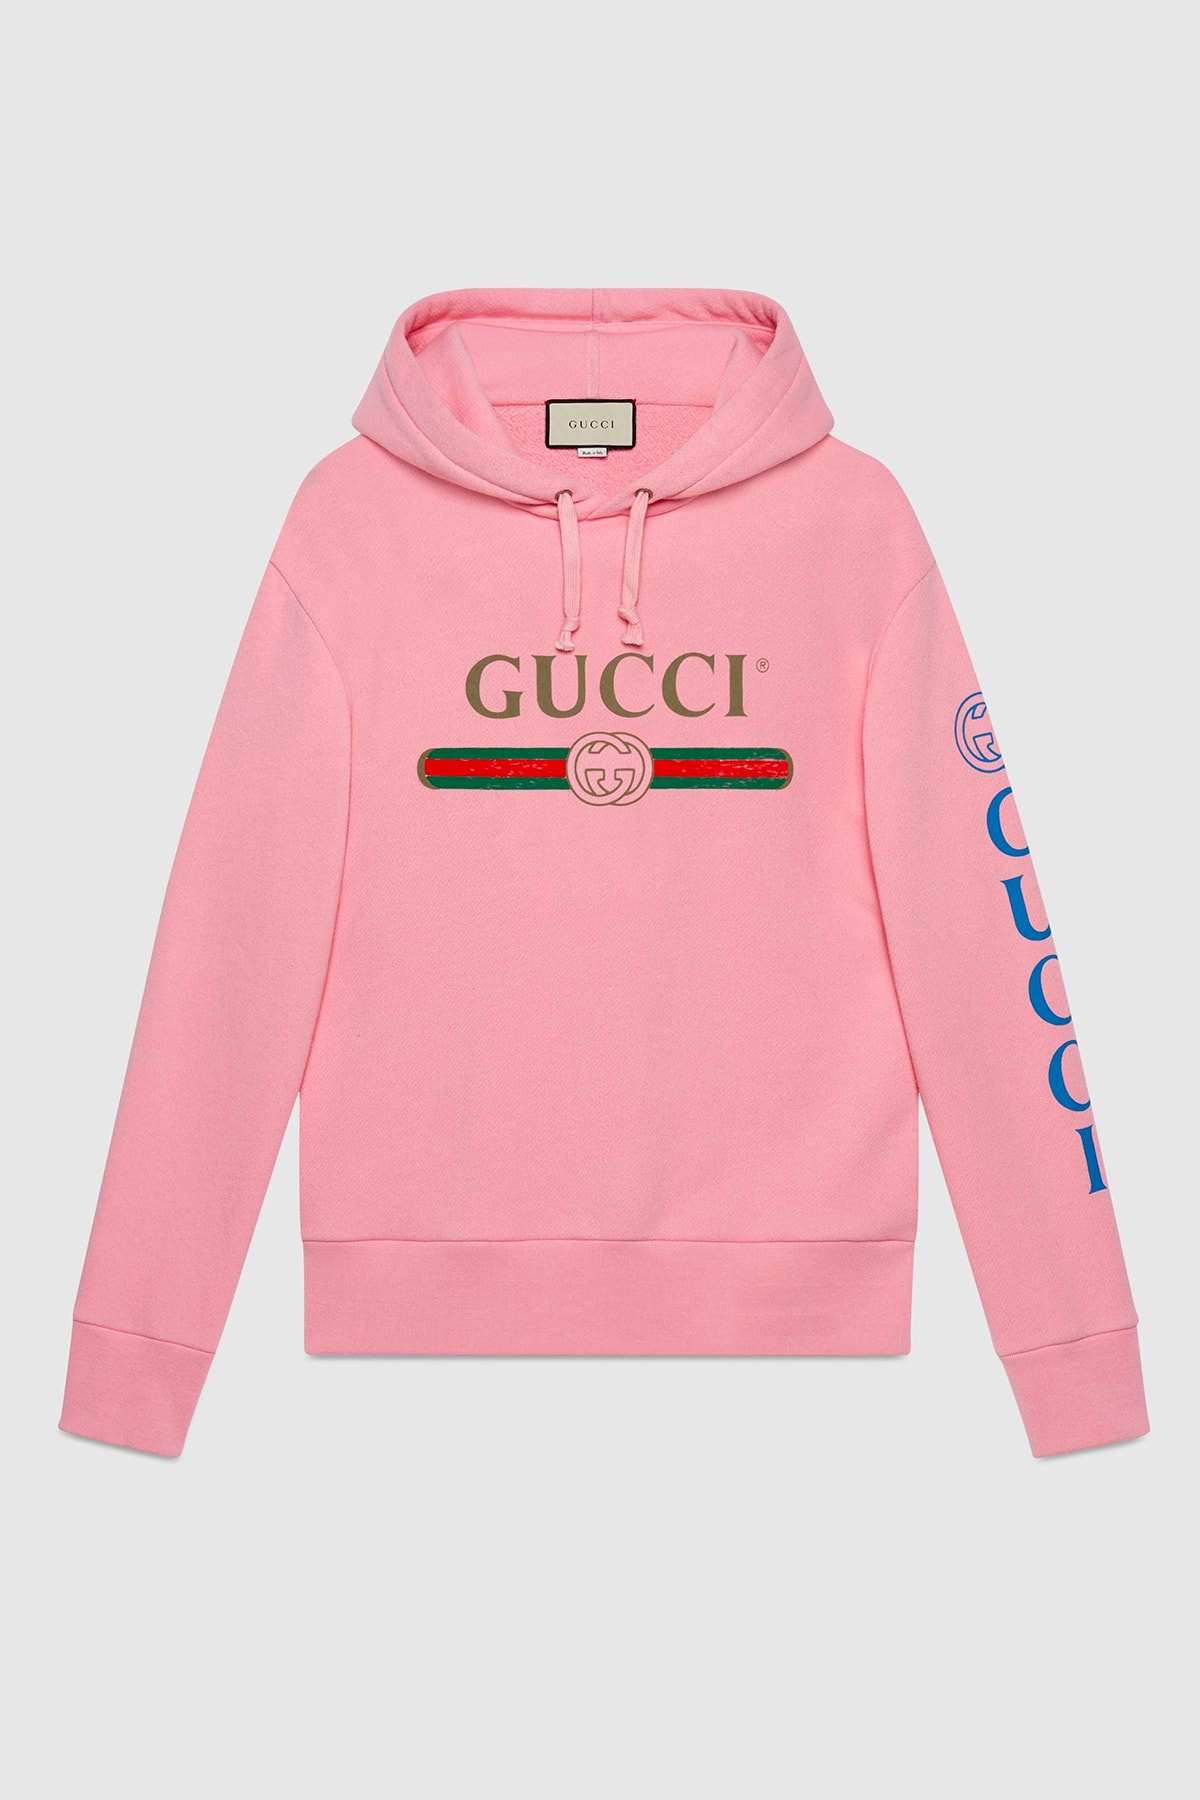 Gucci Pink Vintage Logo Hoodie with Dragon